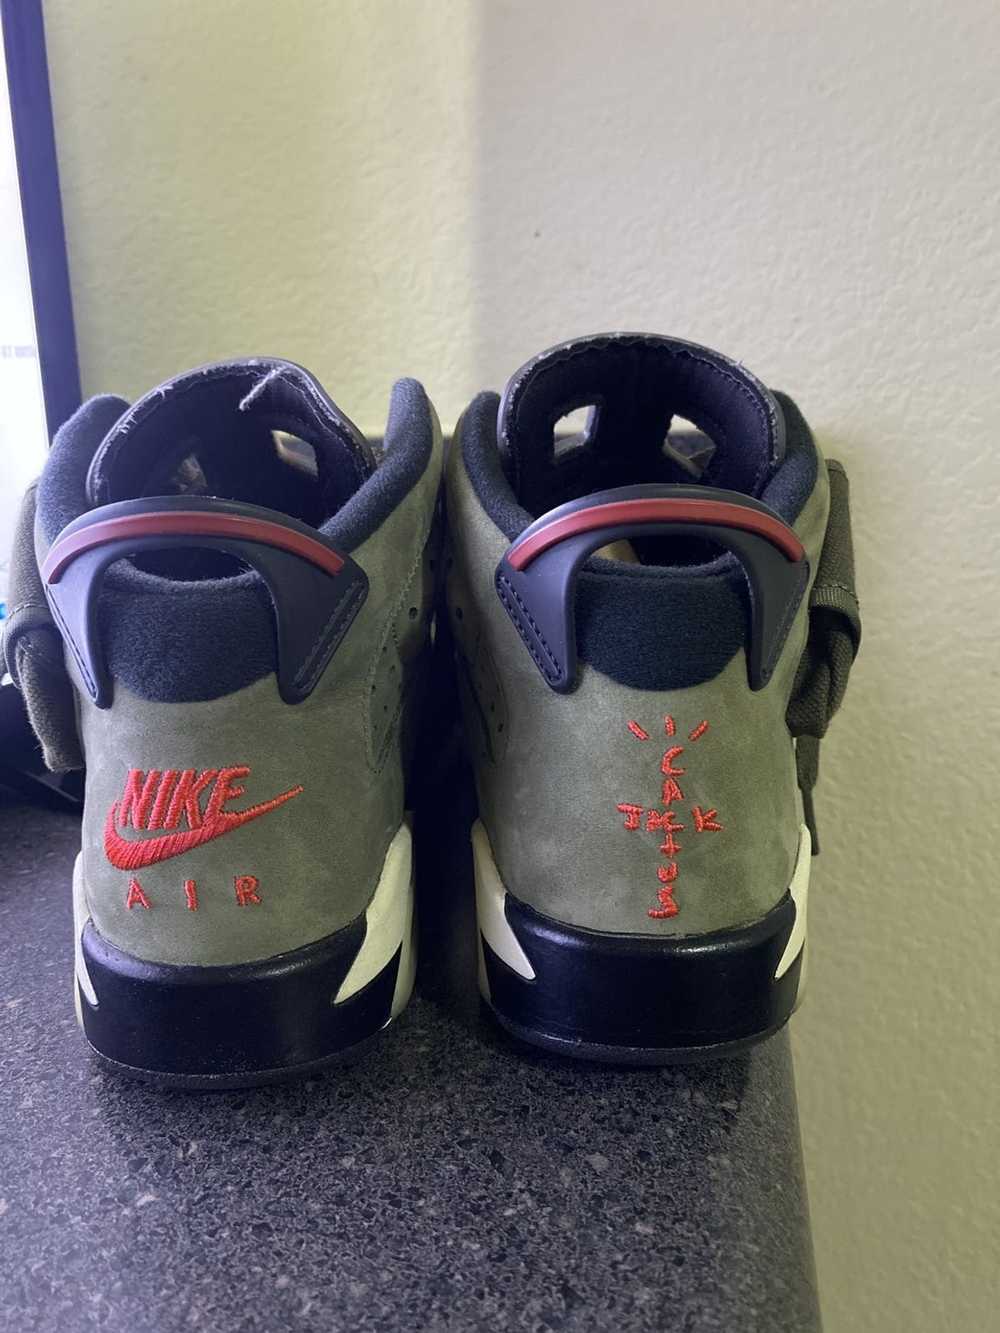 Jordan Brand × Nike Cactus Jack 6s - image 3